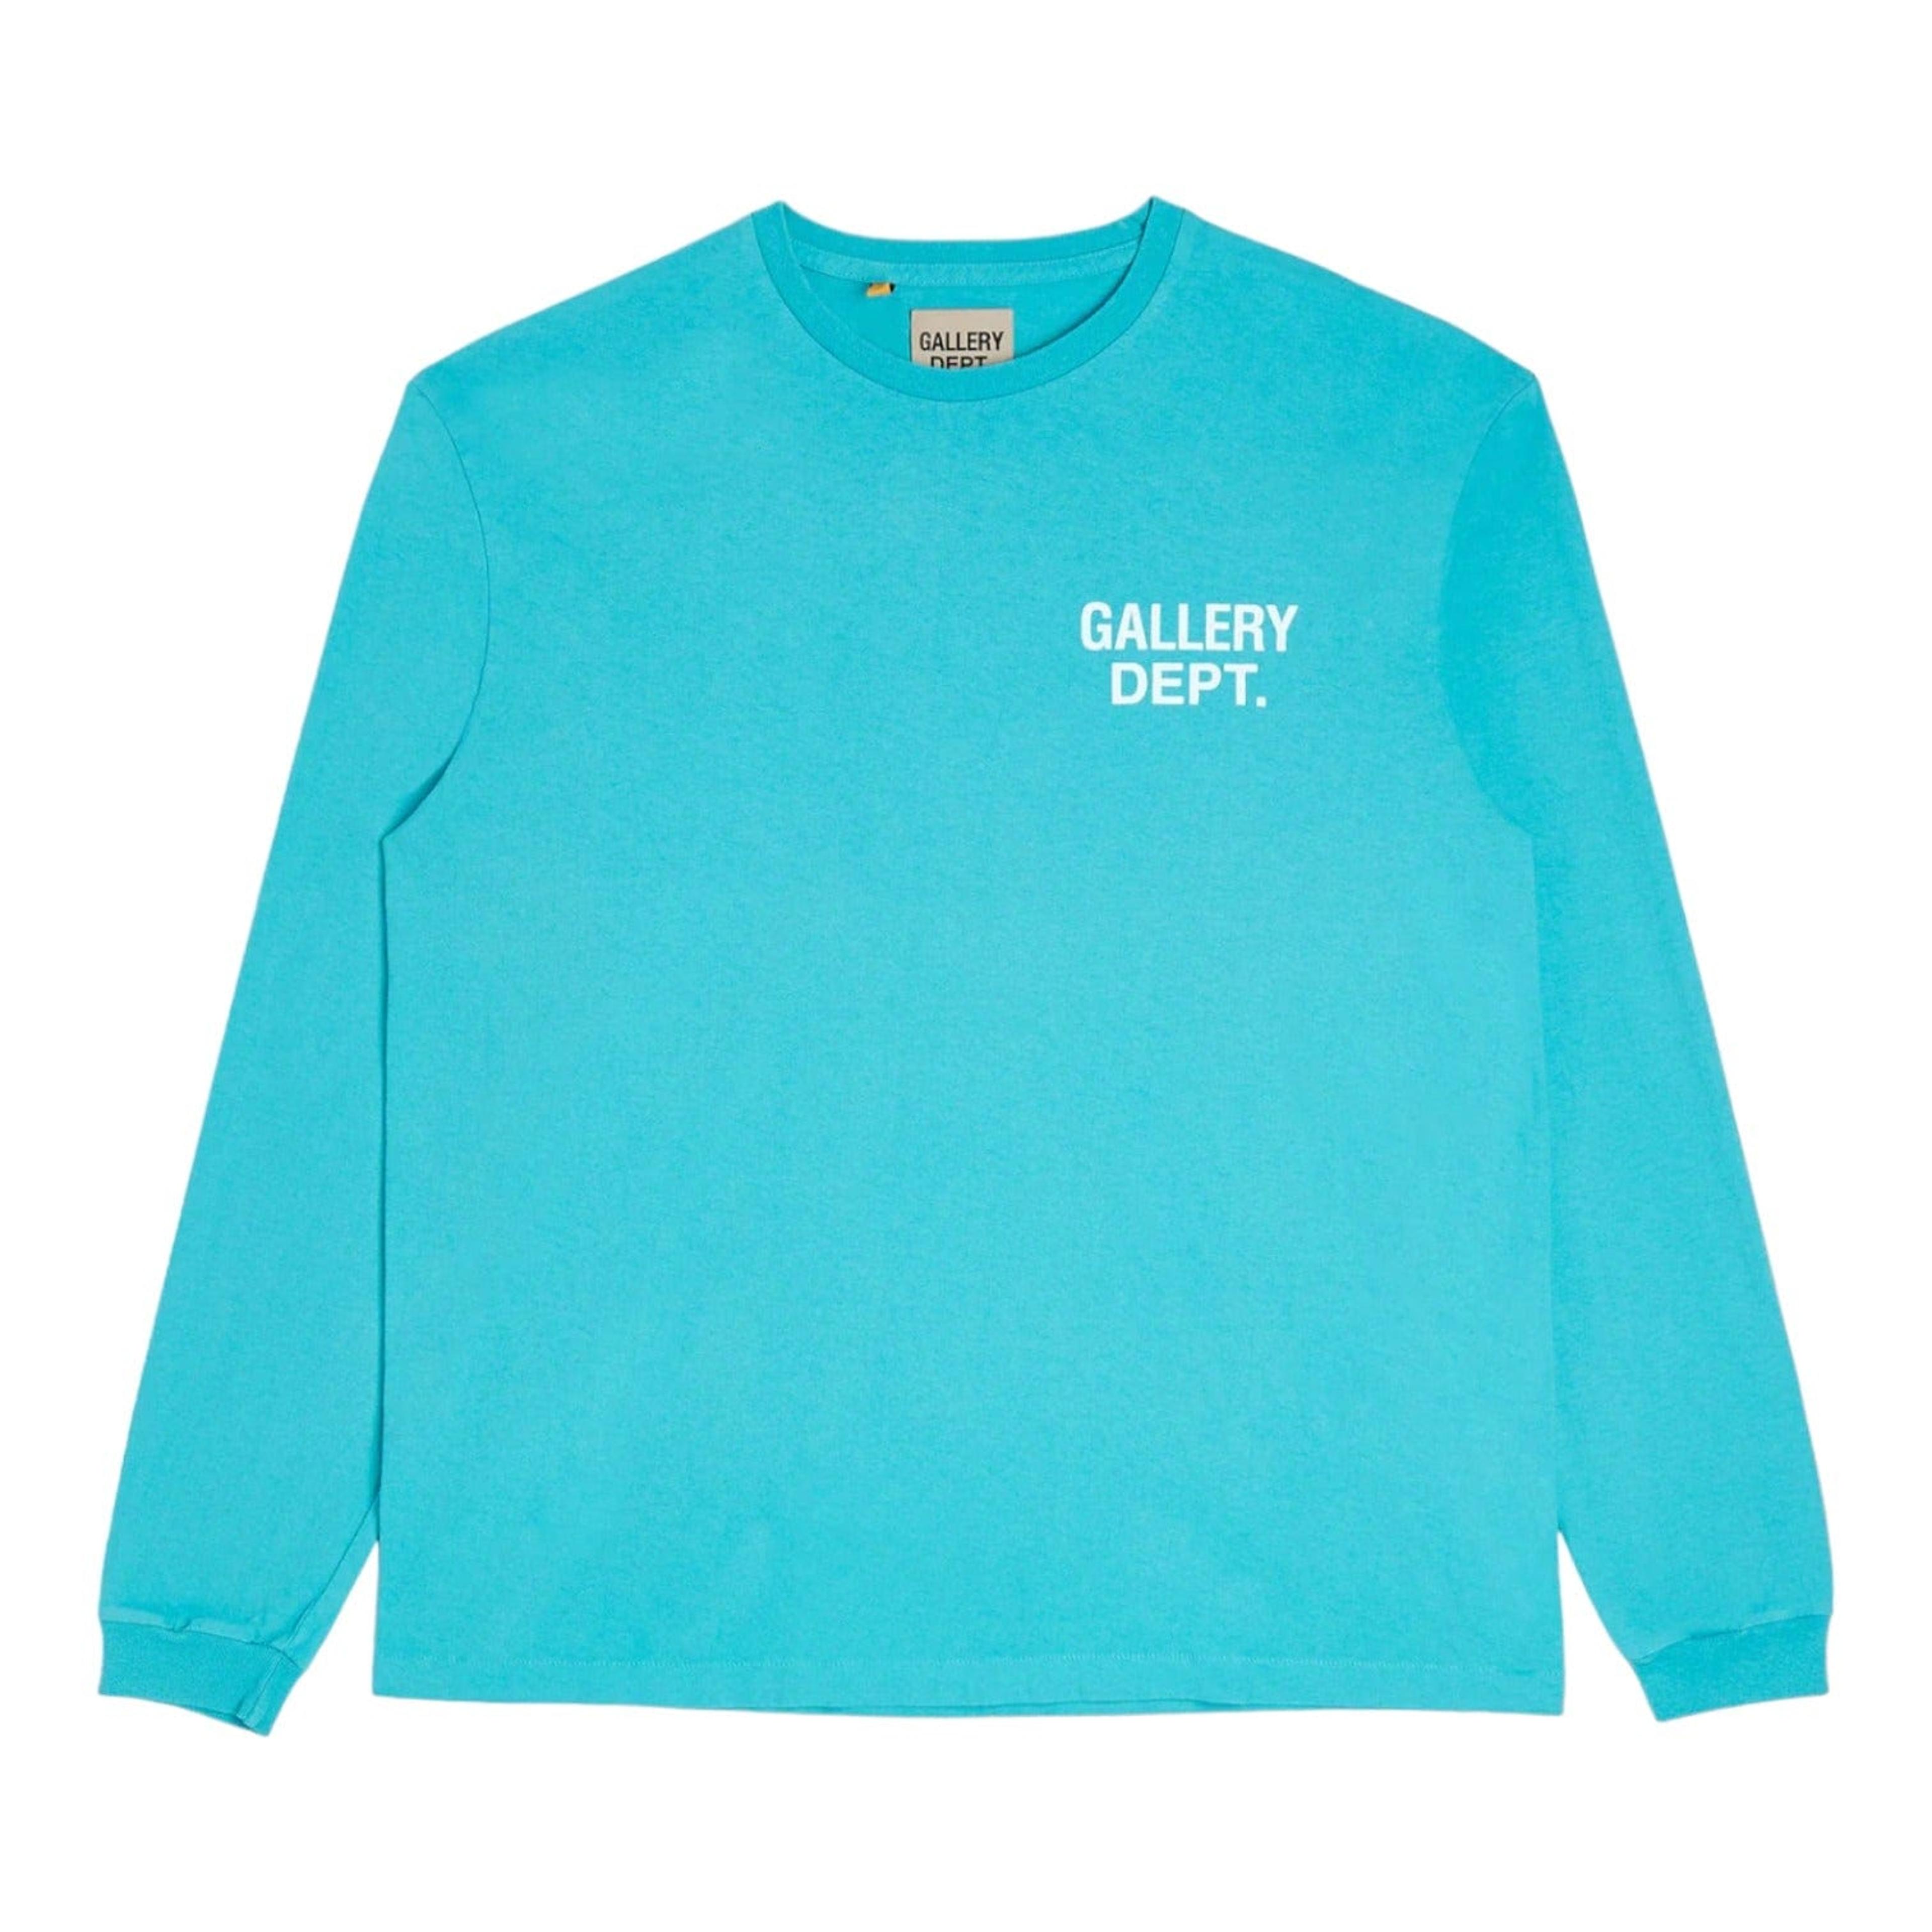 Alternate View 1 of Gallery Department Souvenir Long Sleeve Tee Shirt Teal Blue